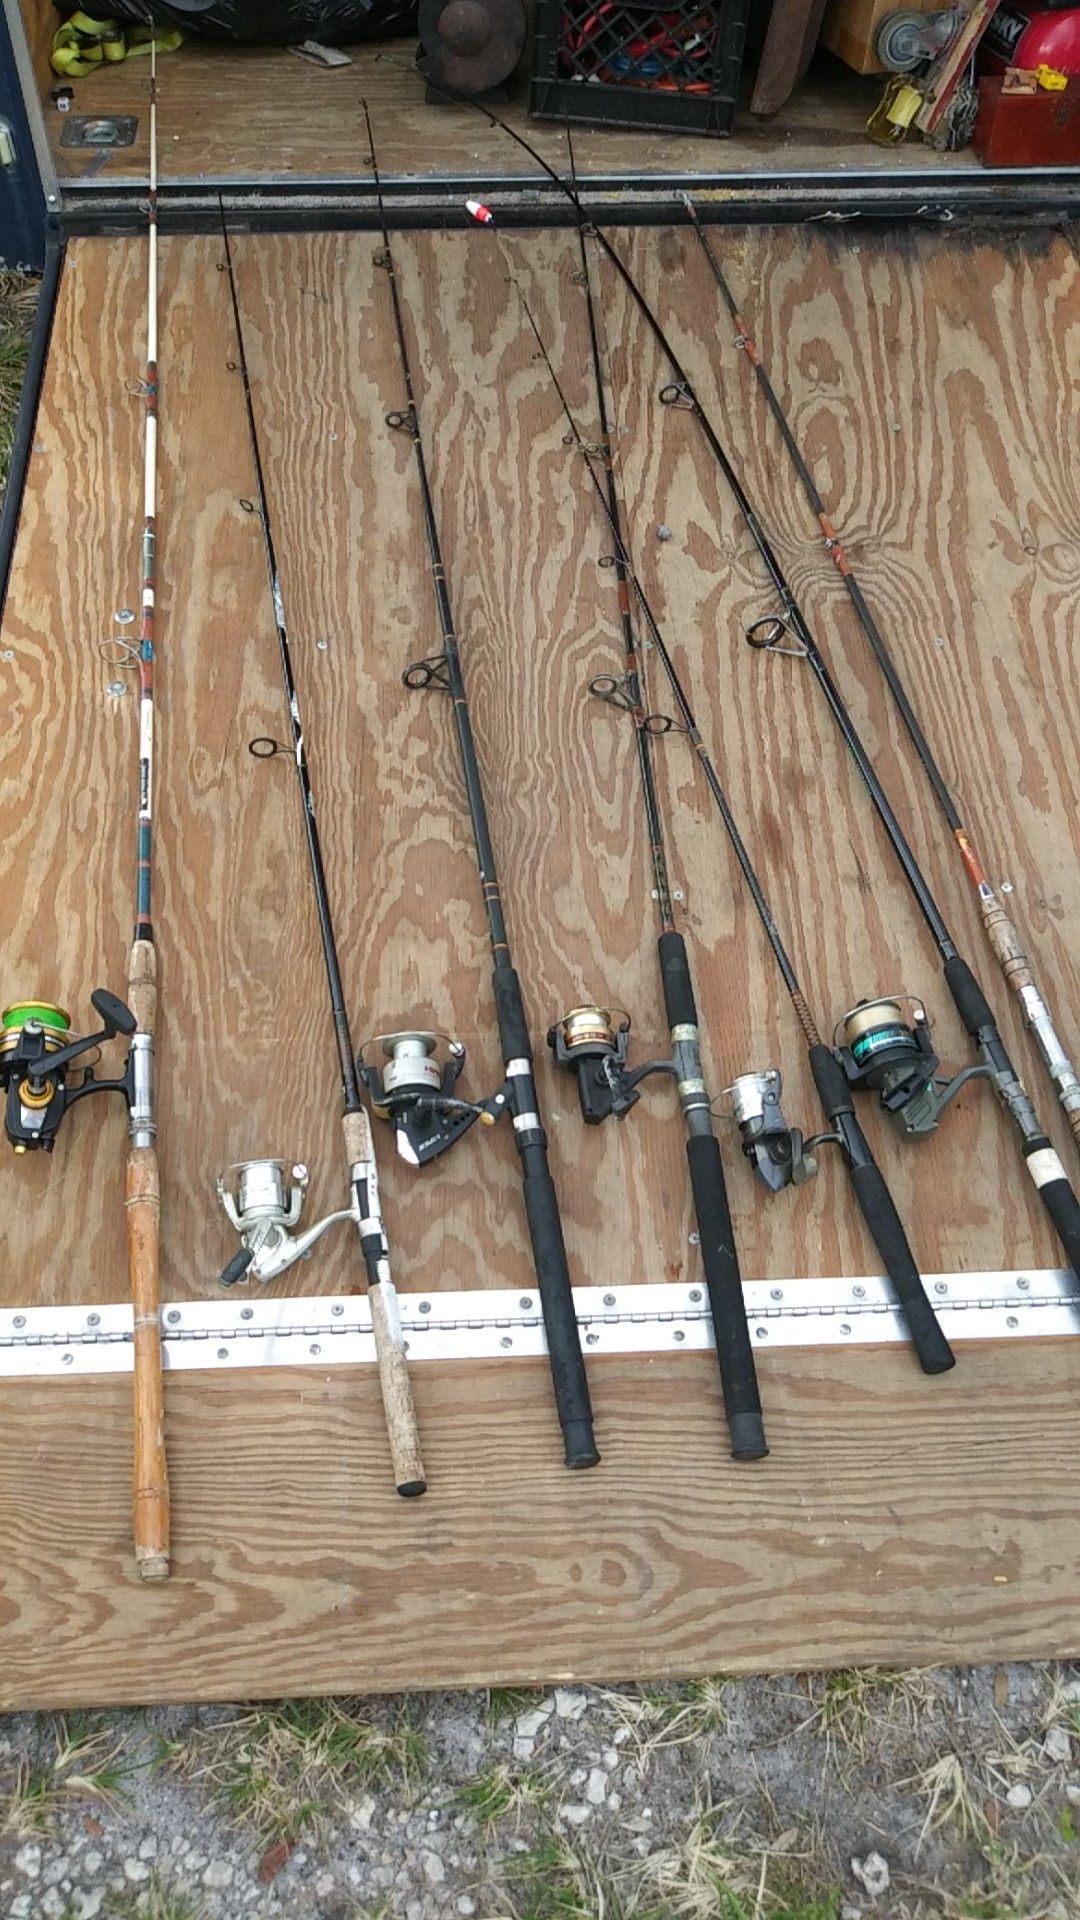 7 Fishing rods/reels